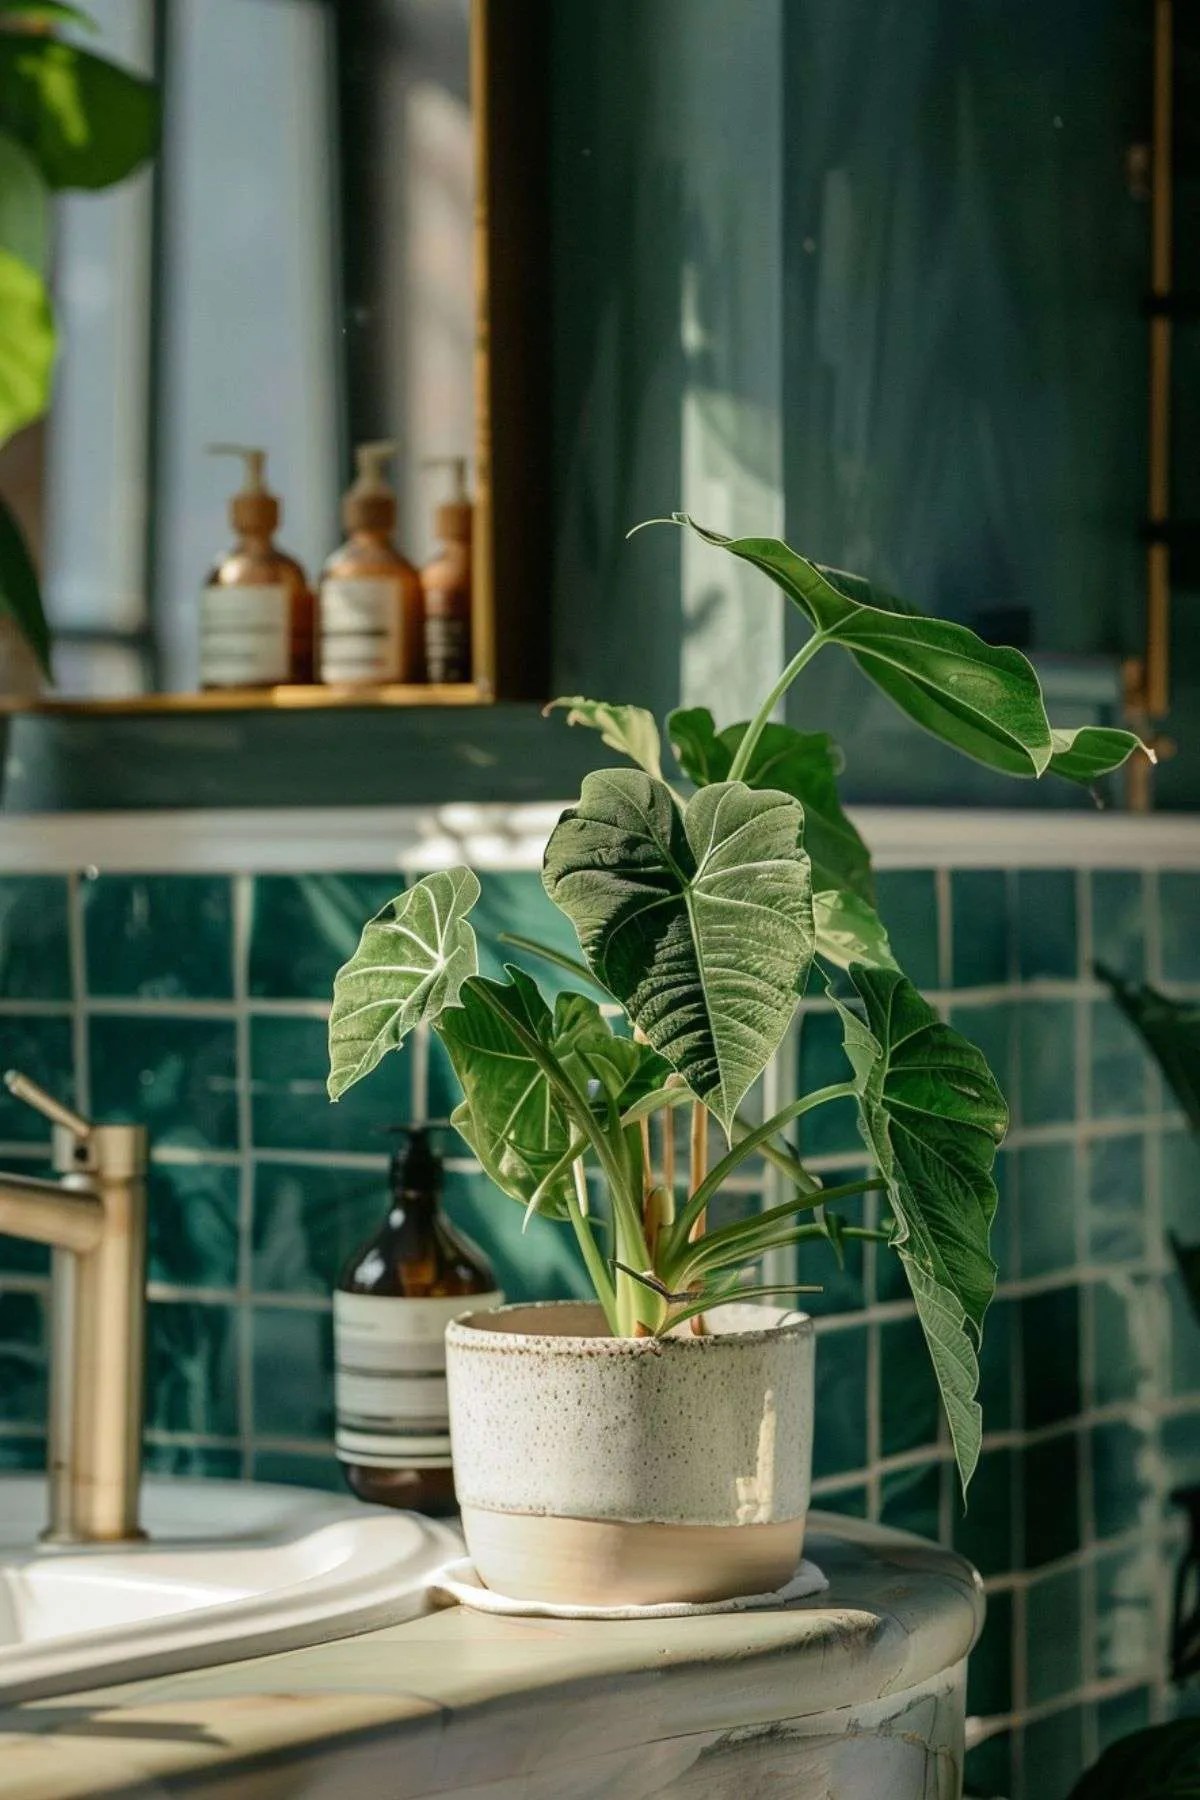 Alocasia Plants in Interior Design: Adding Tropical Vibes to Your Home Decor